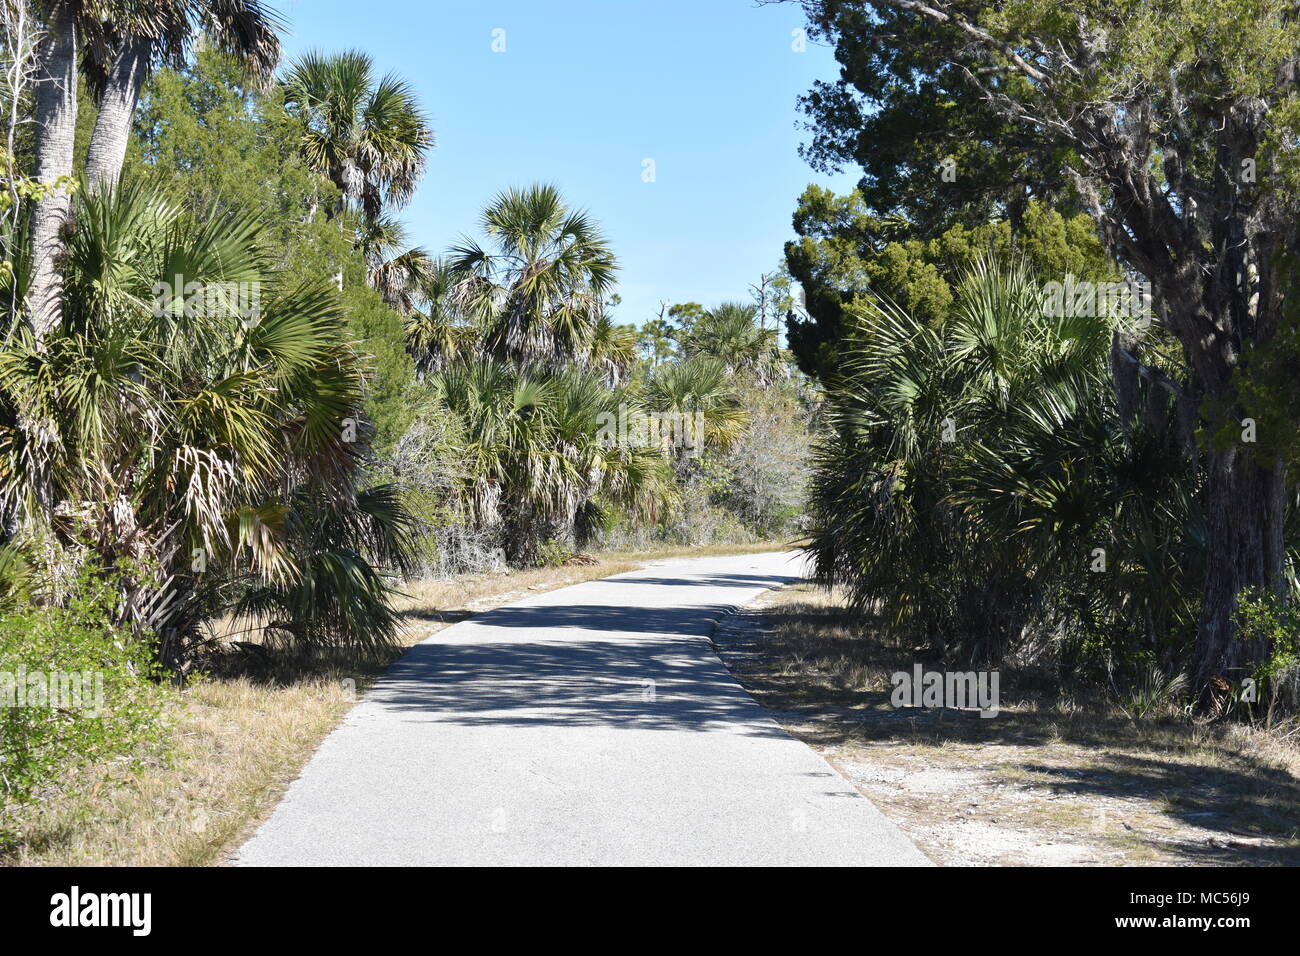 skyScenes from road trip through Weeki Wachee, Florida (USA) Stock Photo